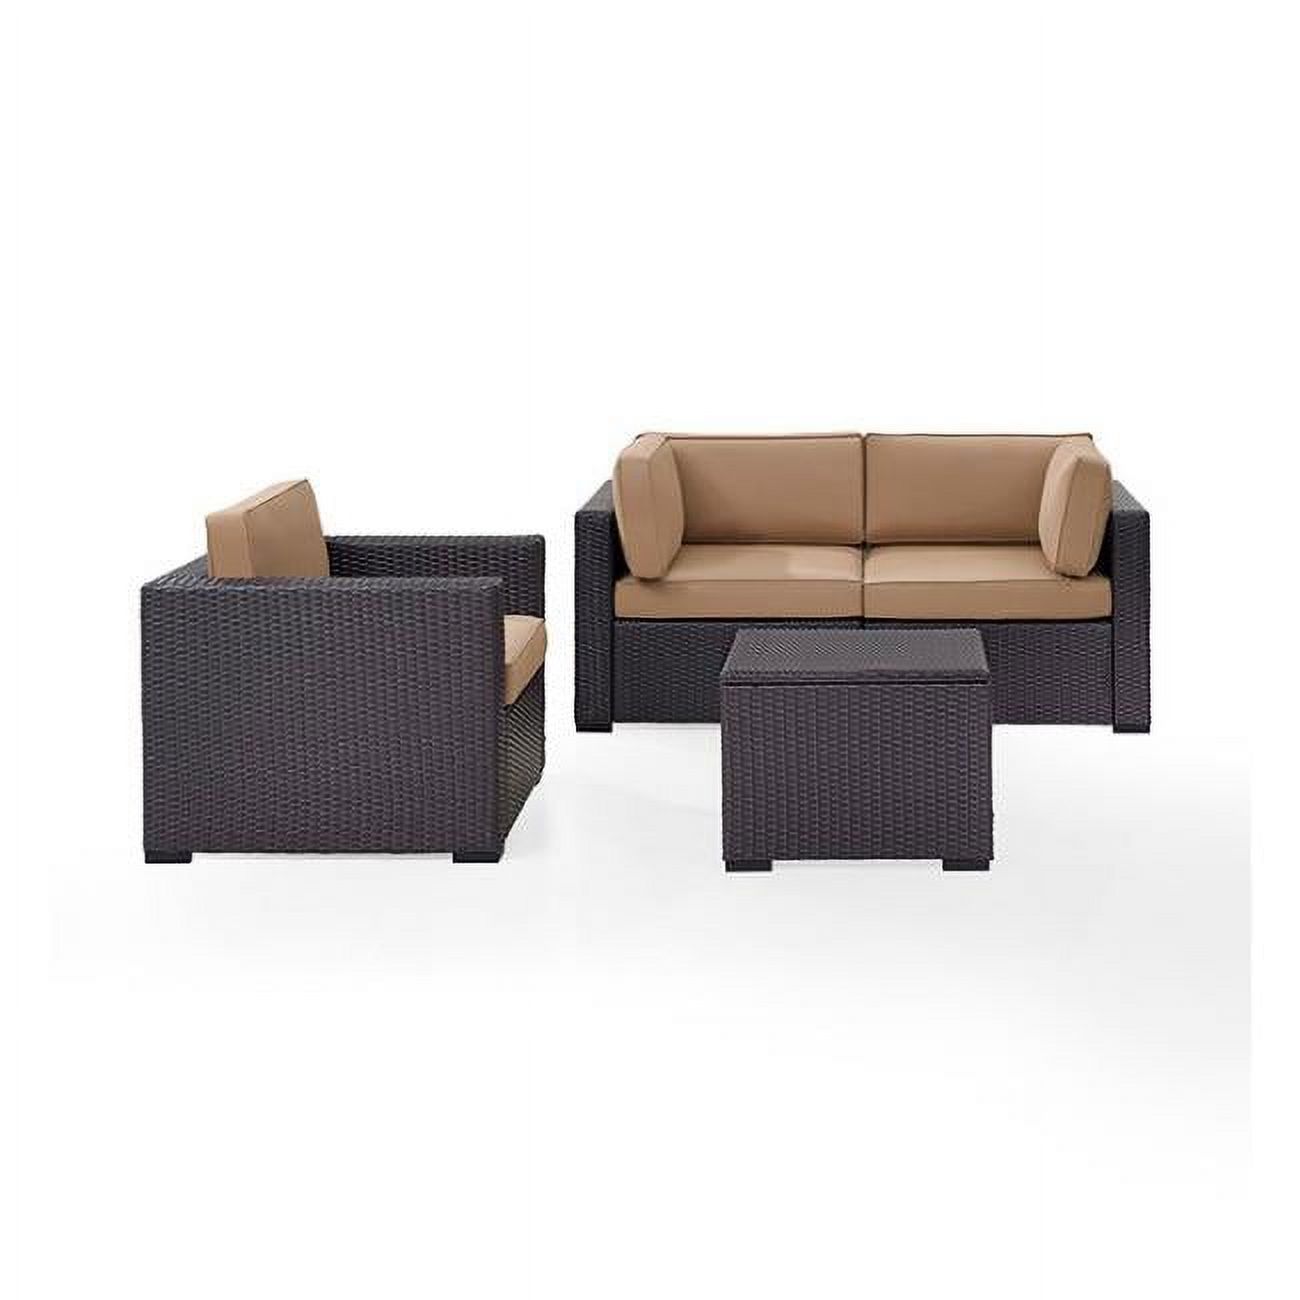 Crosley Furniture Biscayne 4 Piece Metal Patio Sofa Set in Brown/Mocha - image 1 of 4